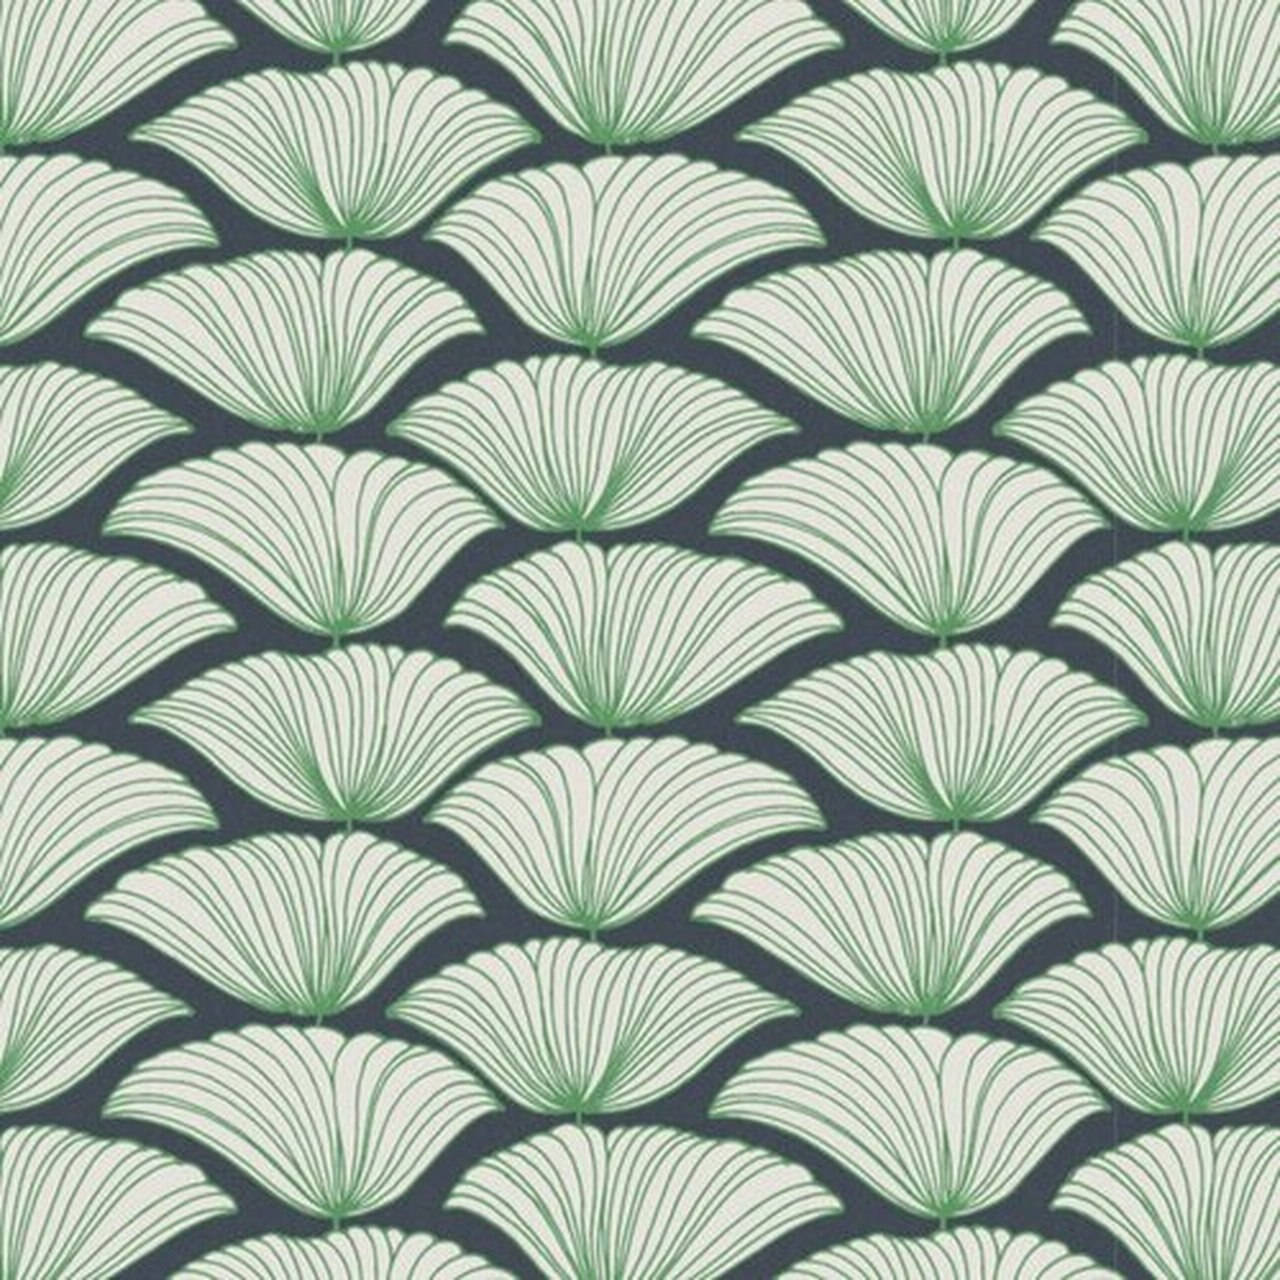 Scallops Design In Pastel Green Background